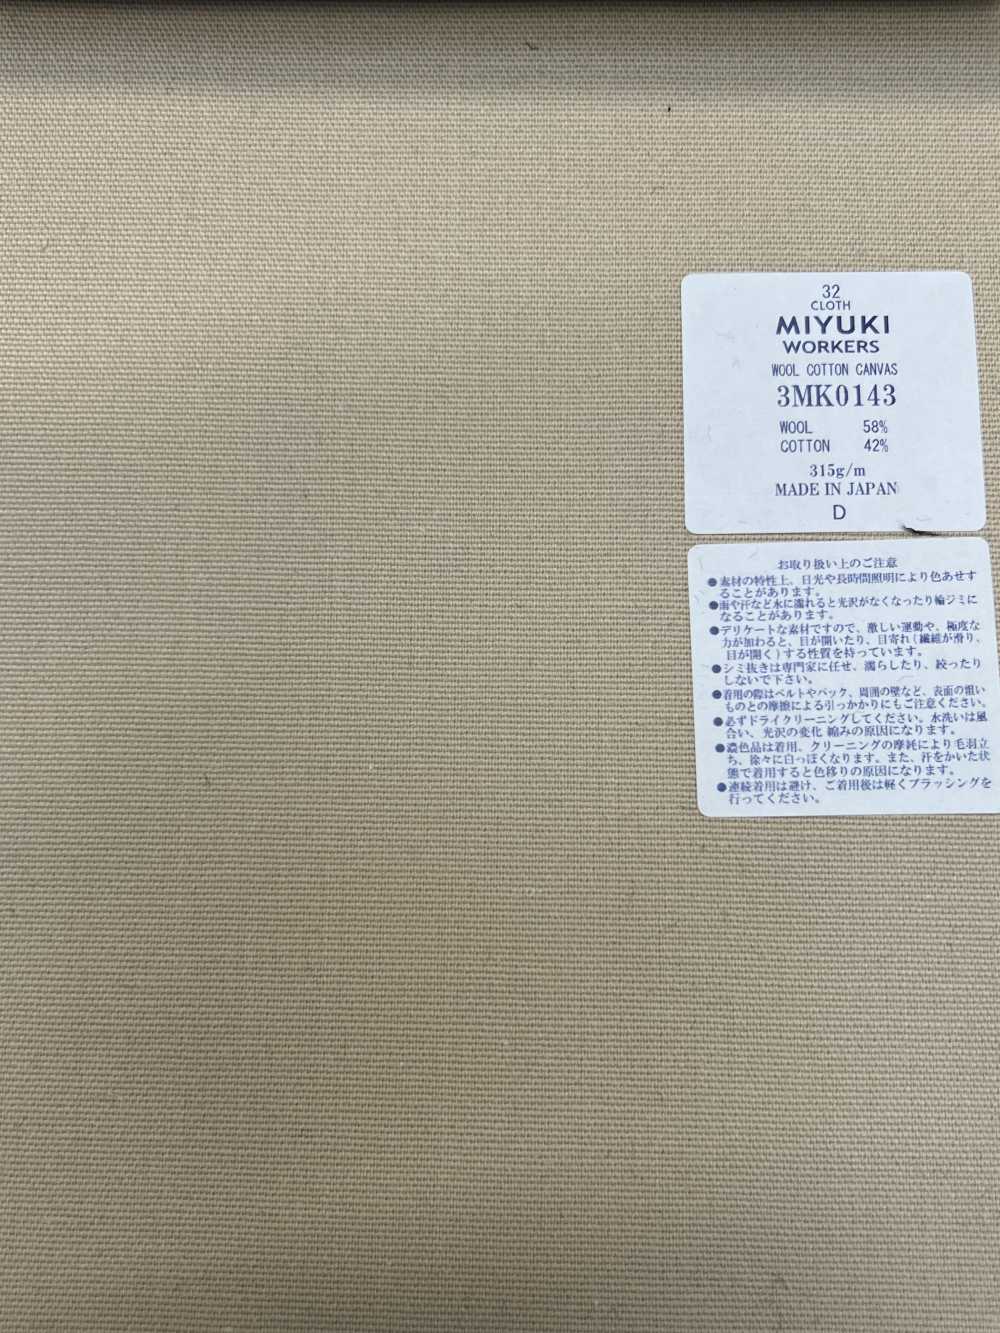 3MK0143 MIYUKI CREATIVE WORKERS 羊毛棉帆布淺棕色[面料] 美雪敬織 (Miyuki)